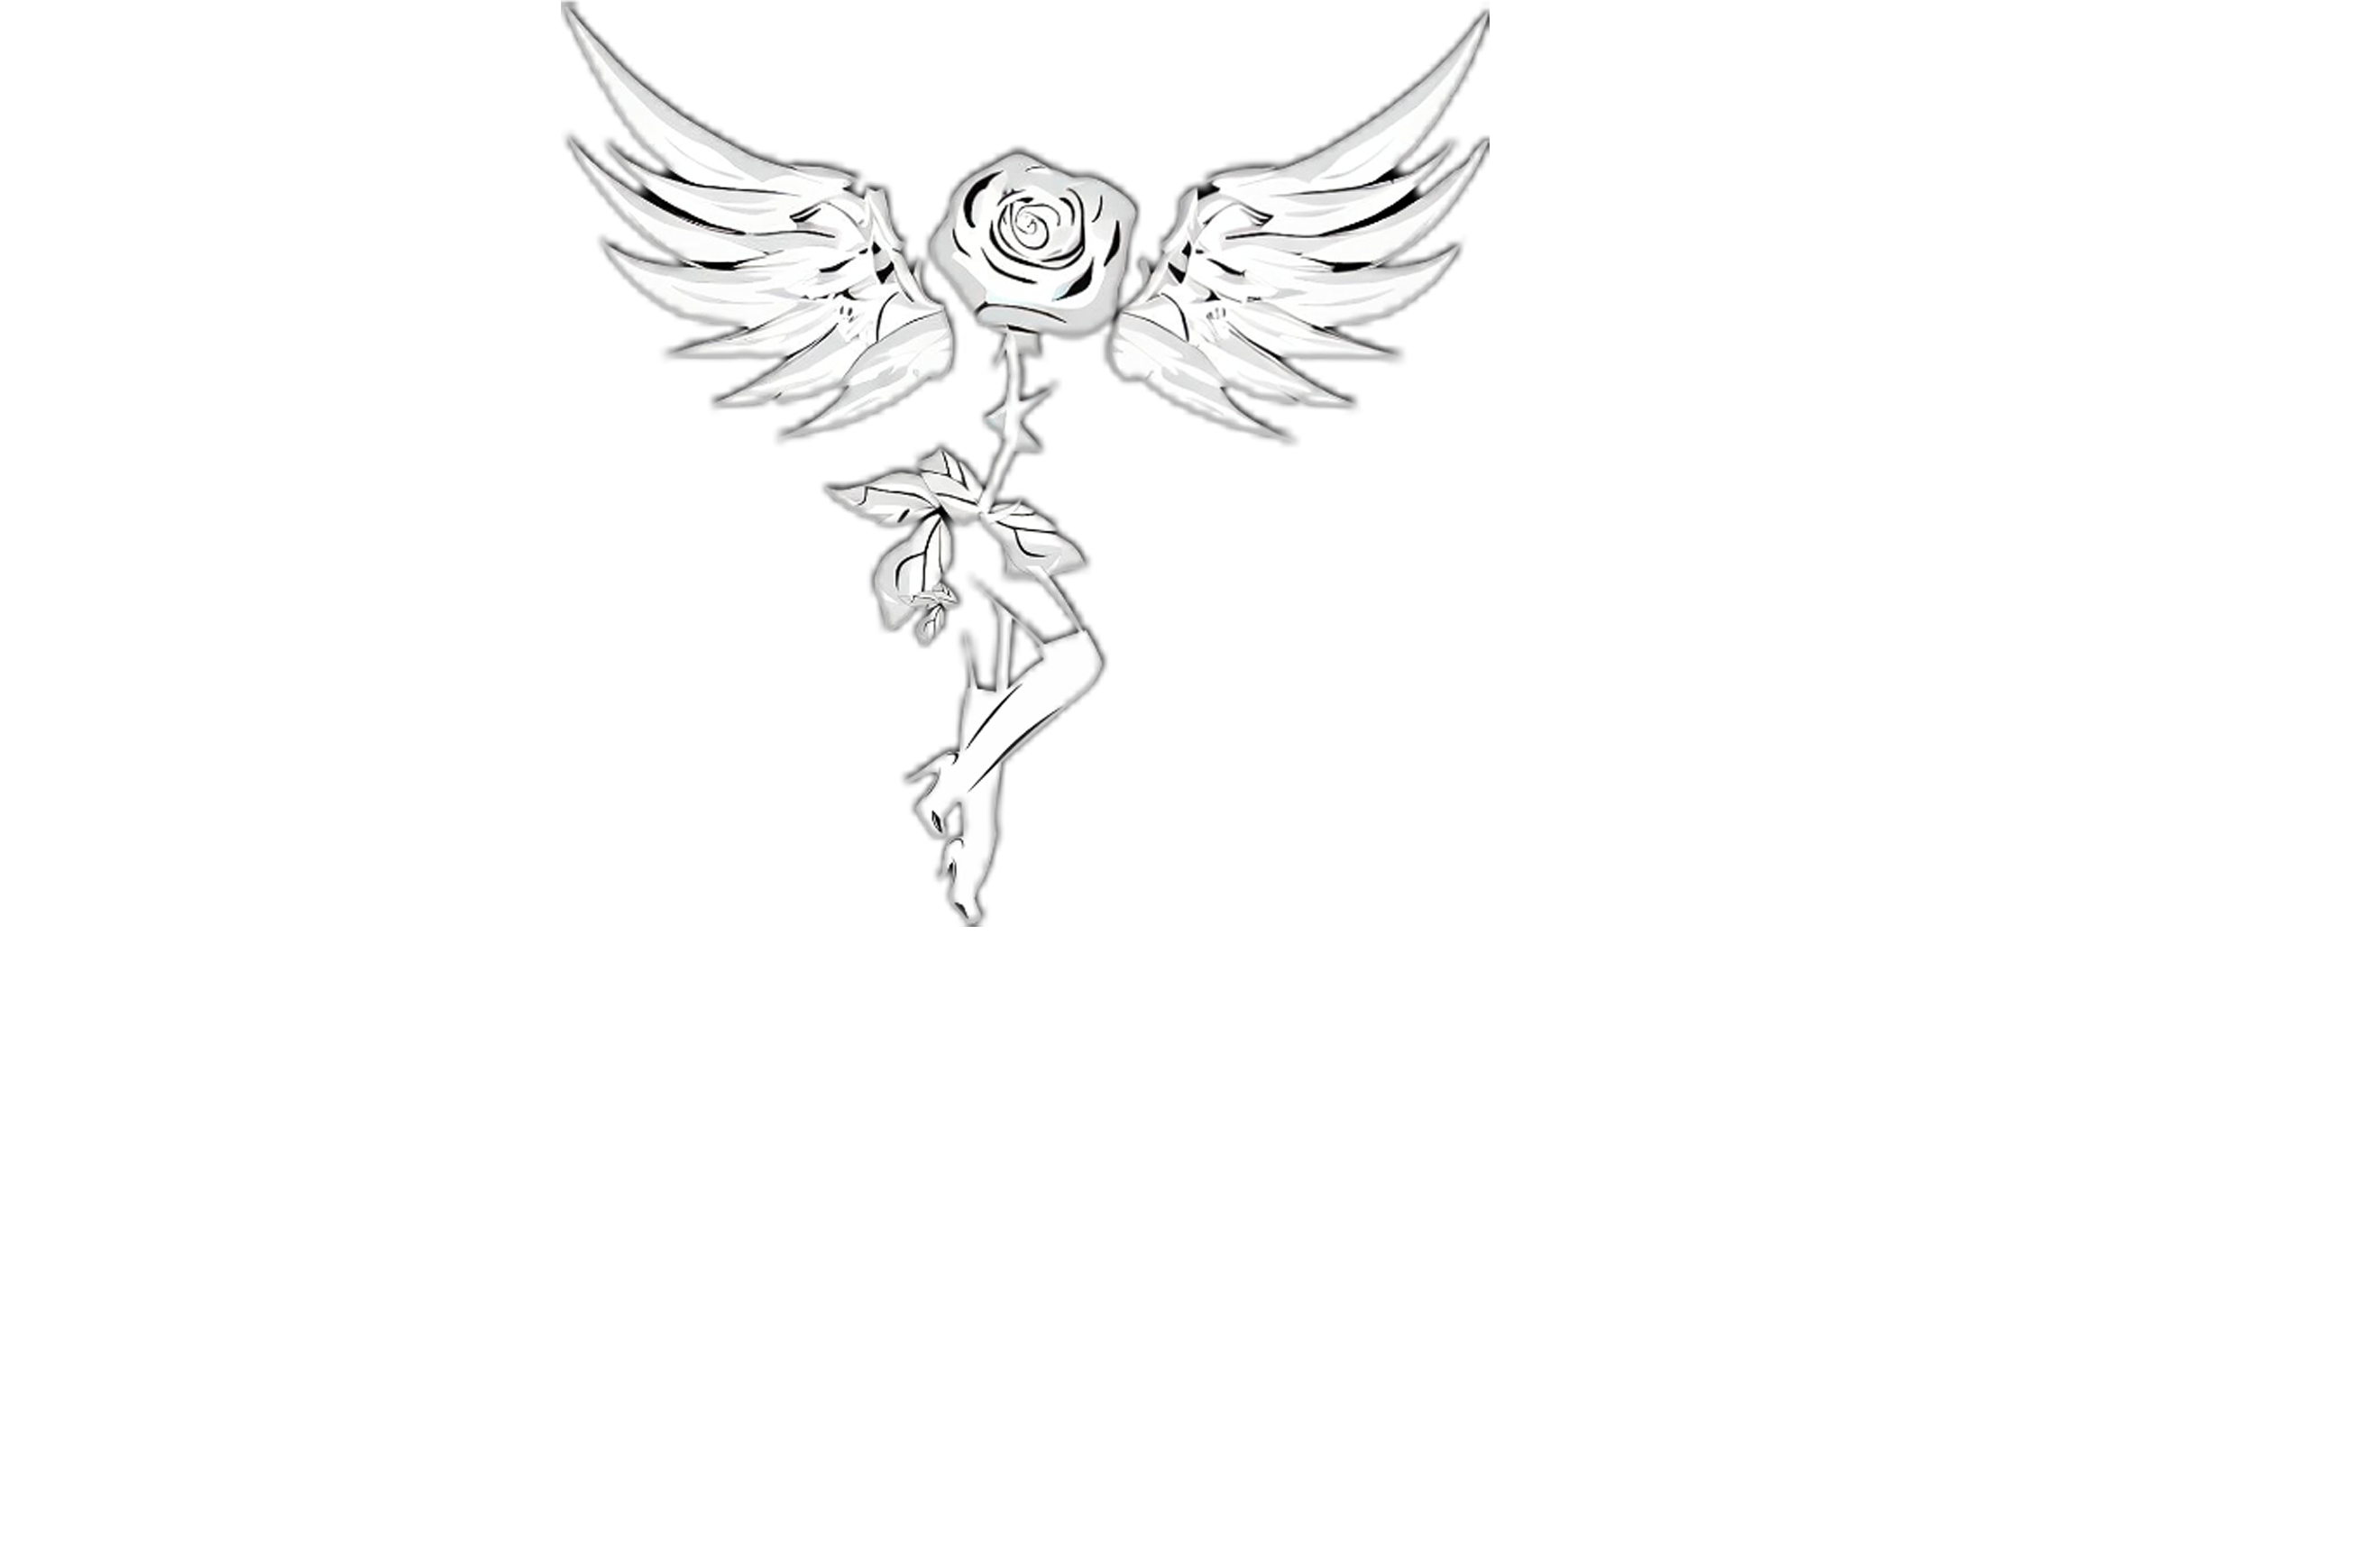 Sin's Angels logo